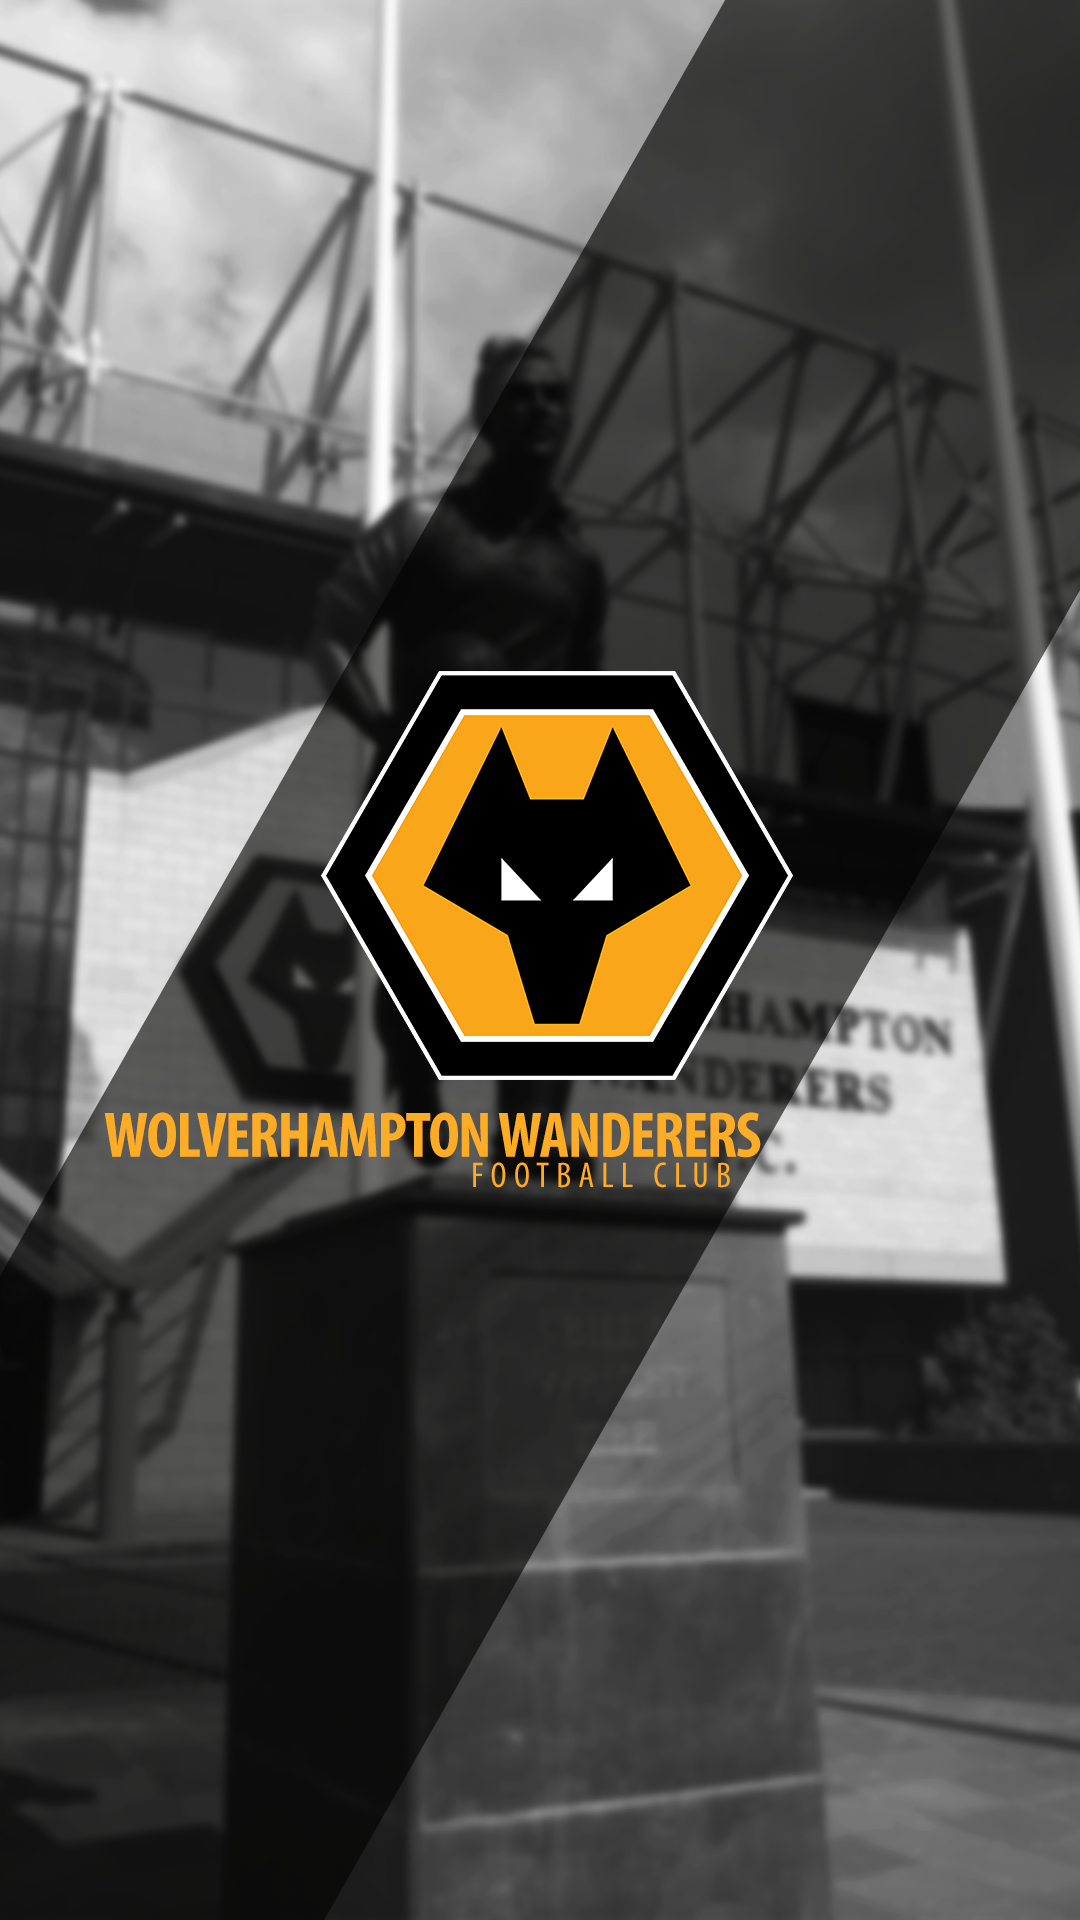 11+ Wolverhampton Wanderers F.C. Wallpapers on ...